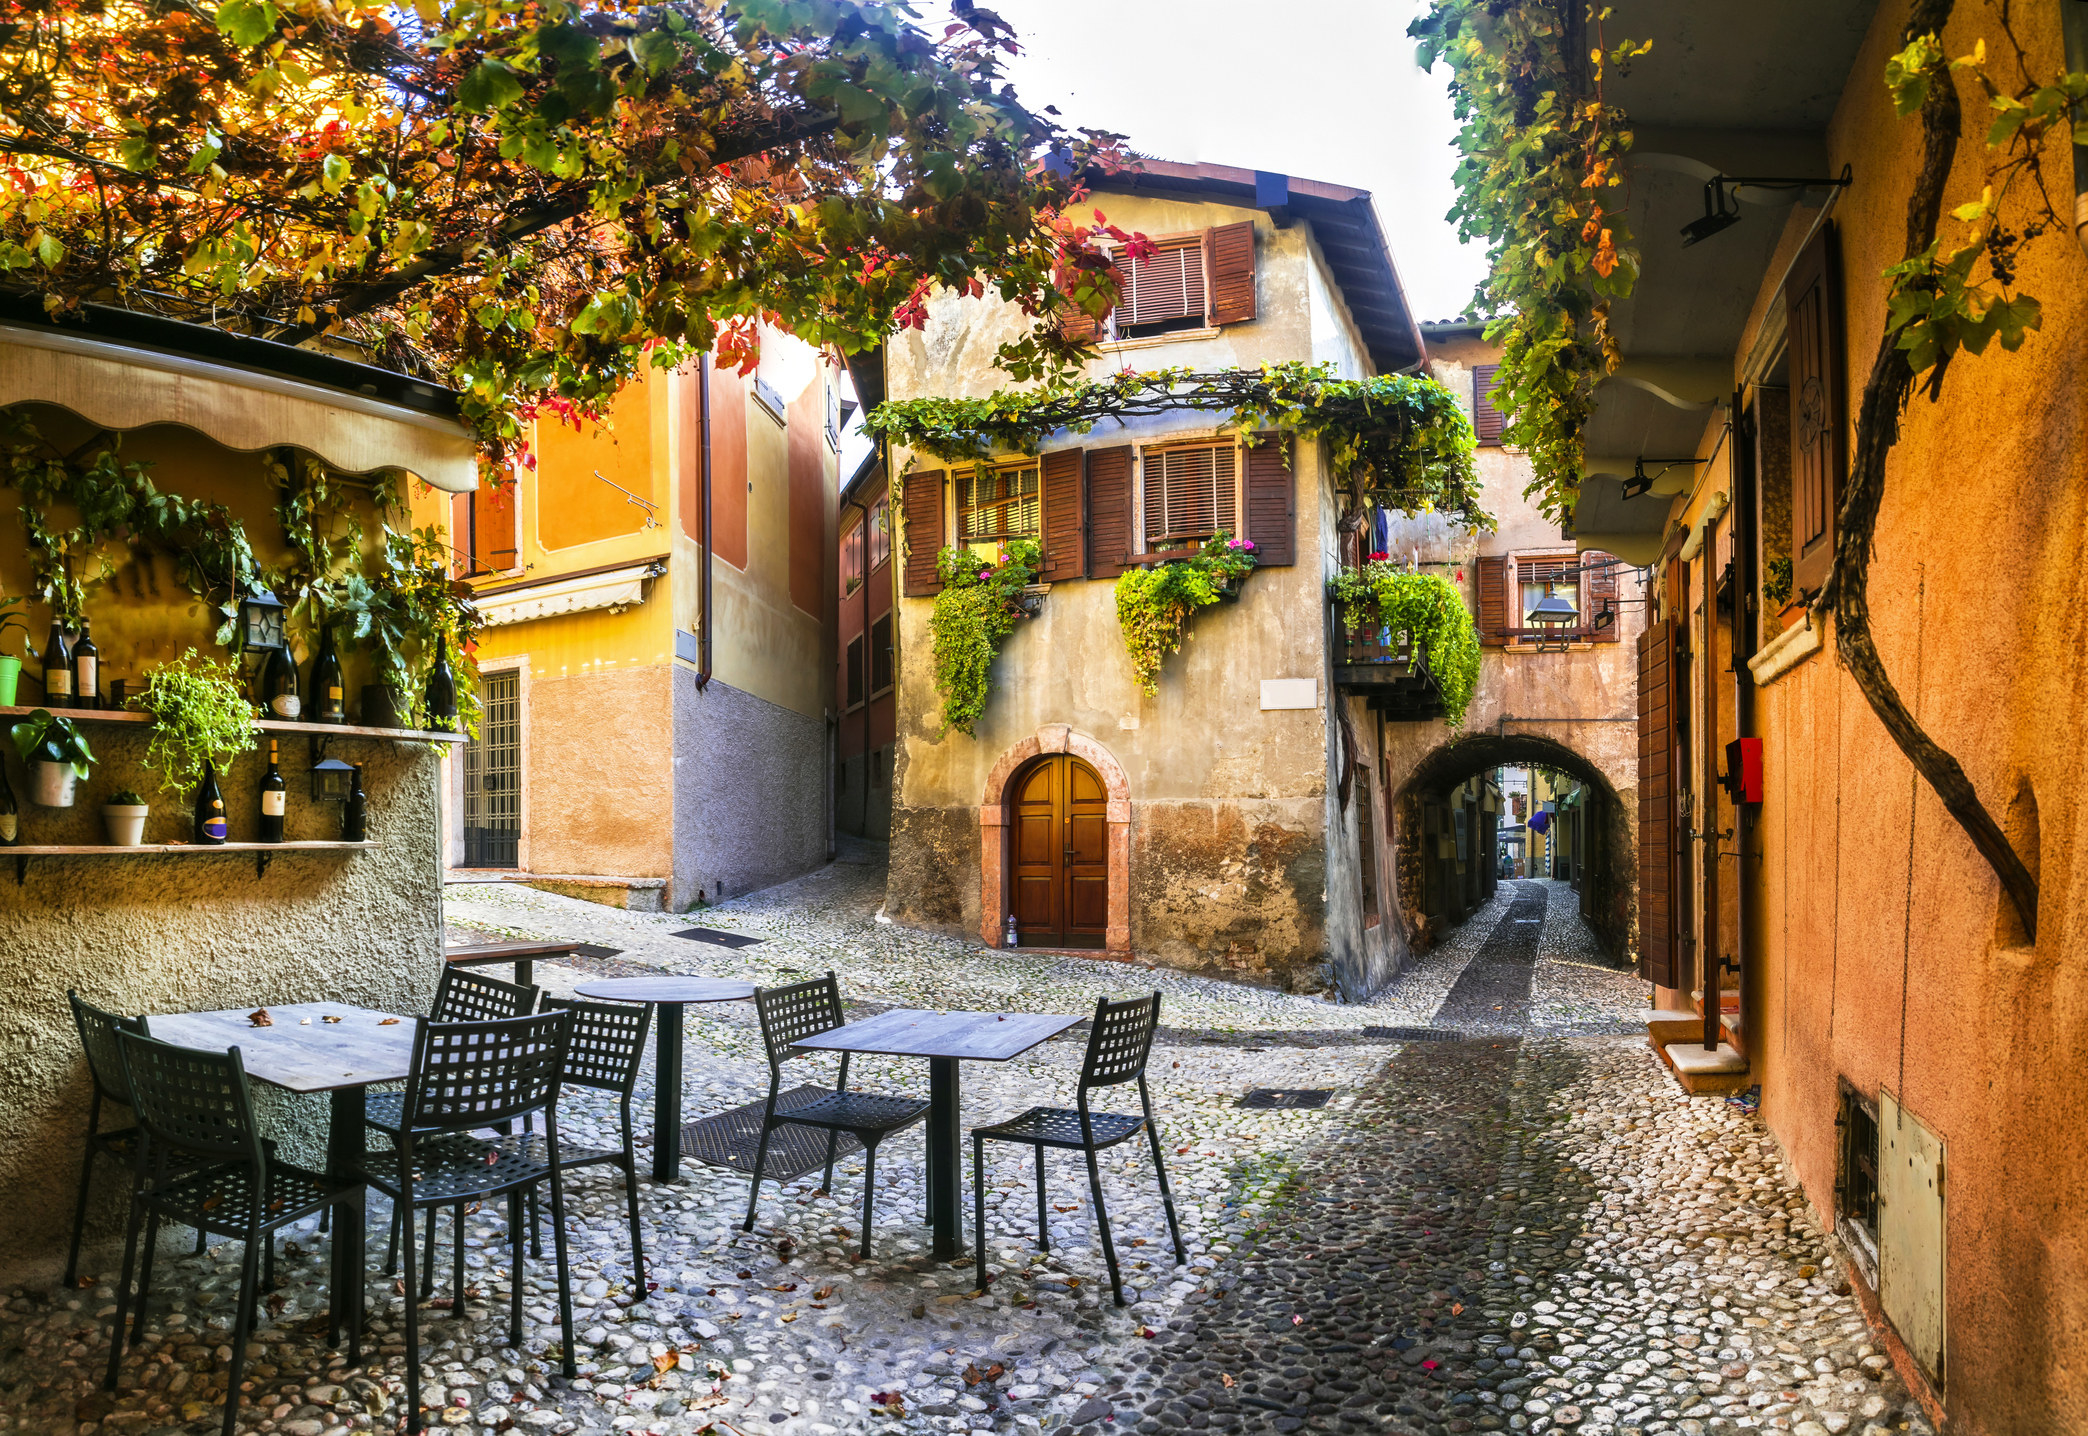 An old, charming Italian town.